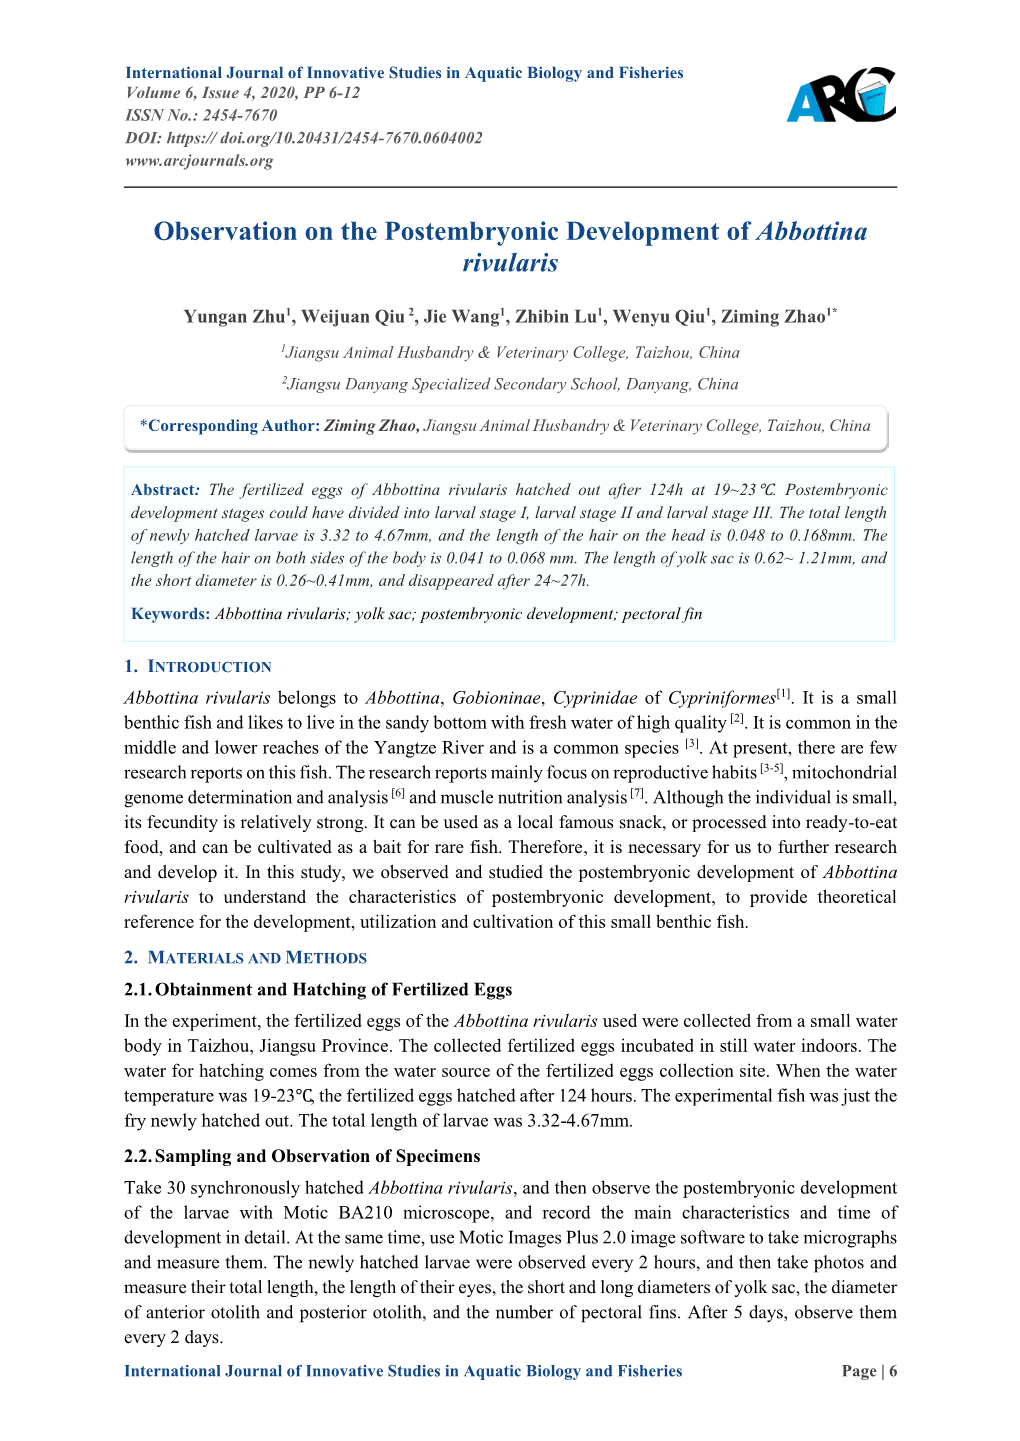 Observation on the Postembryonic Development of Abbottina Rivularis